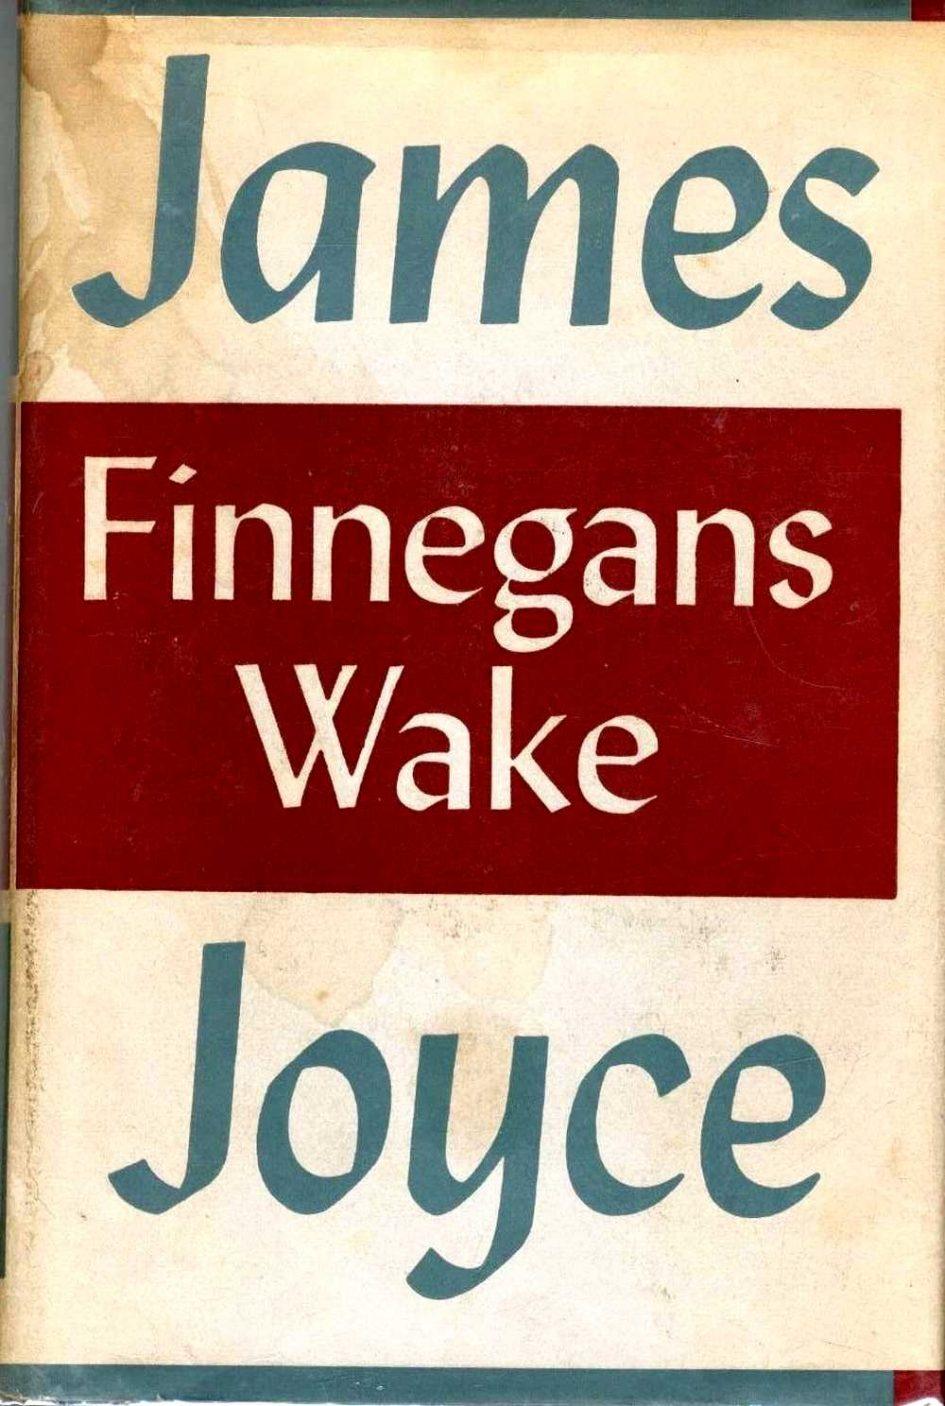 James Joyce Finnegans Wake Reading Event in NY